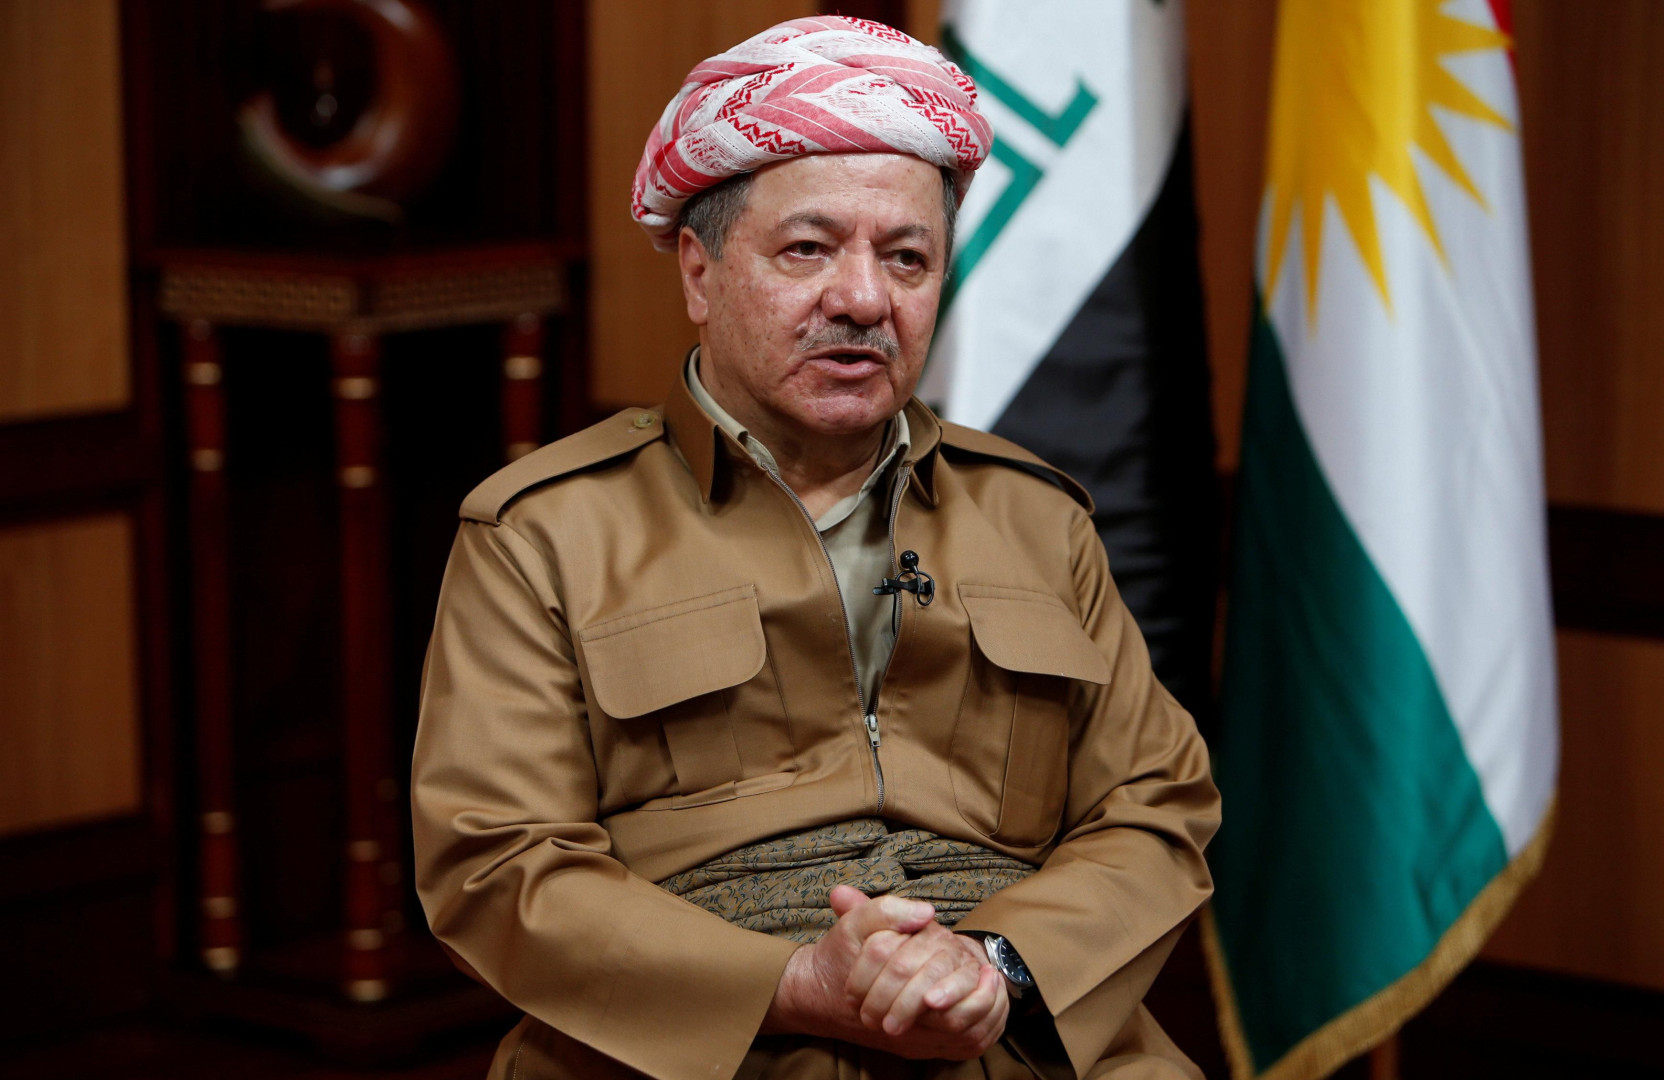 Masoud Barzani condemns Iranian attacks on Erbil, calls for international action